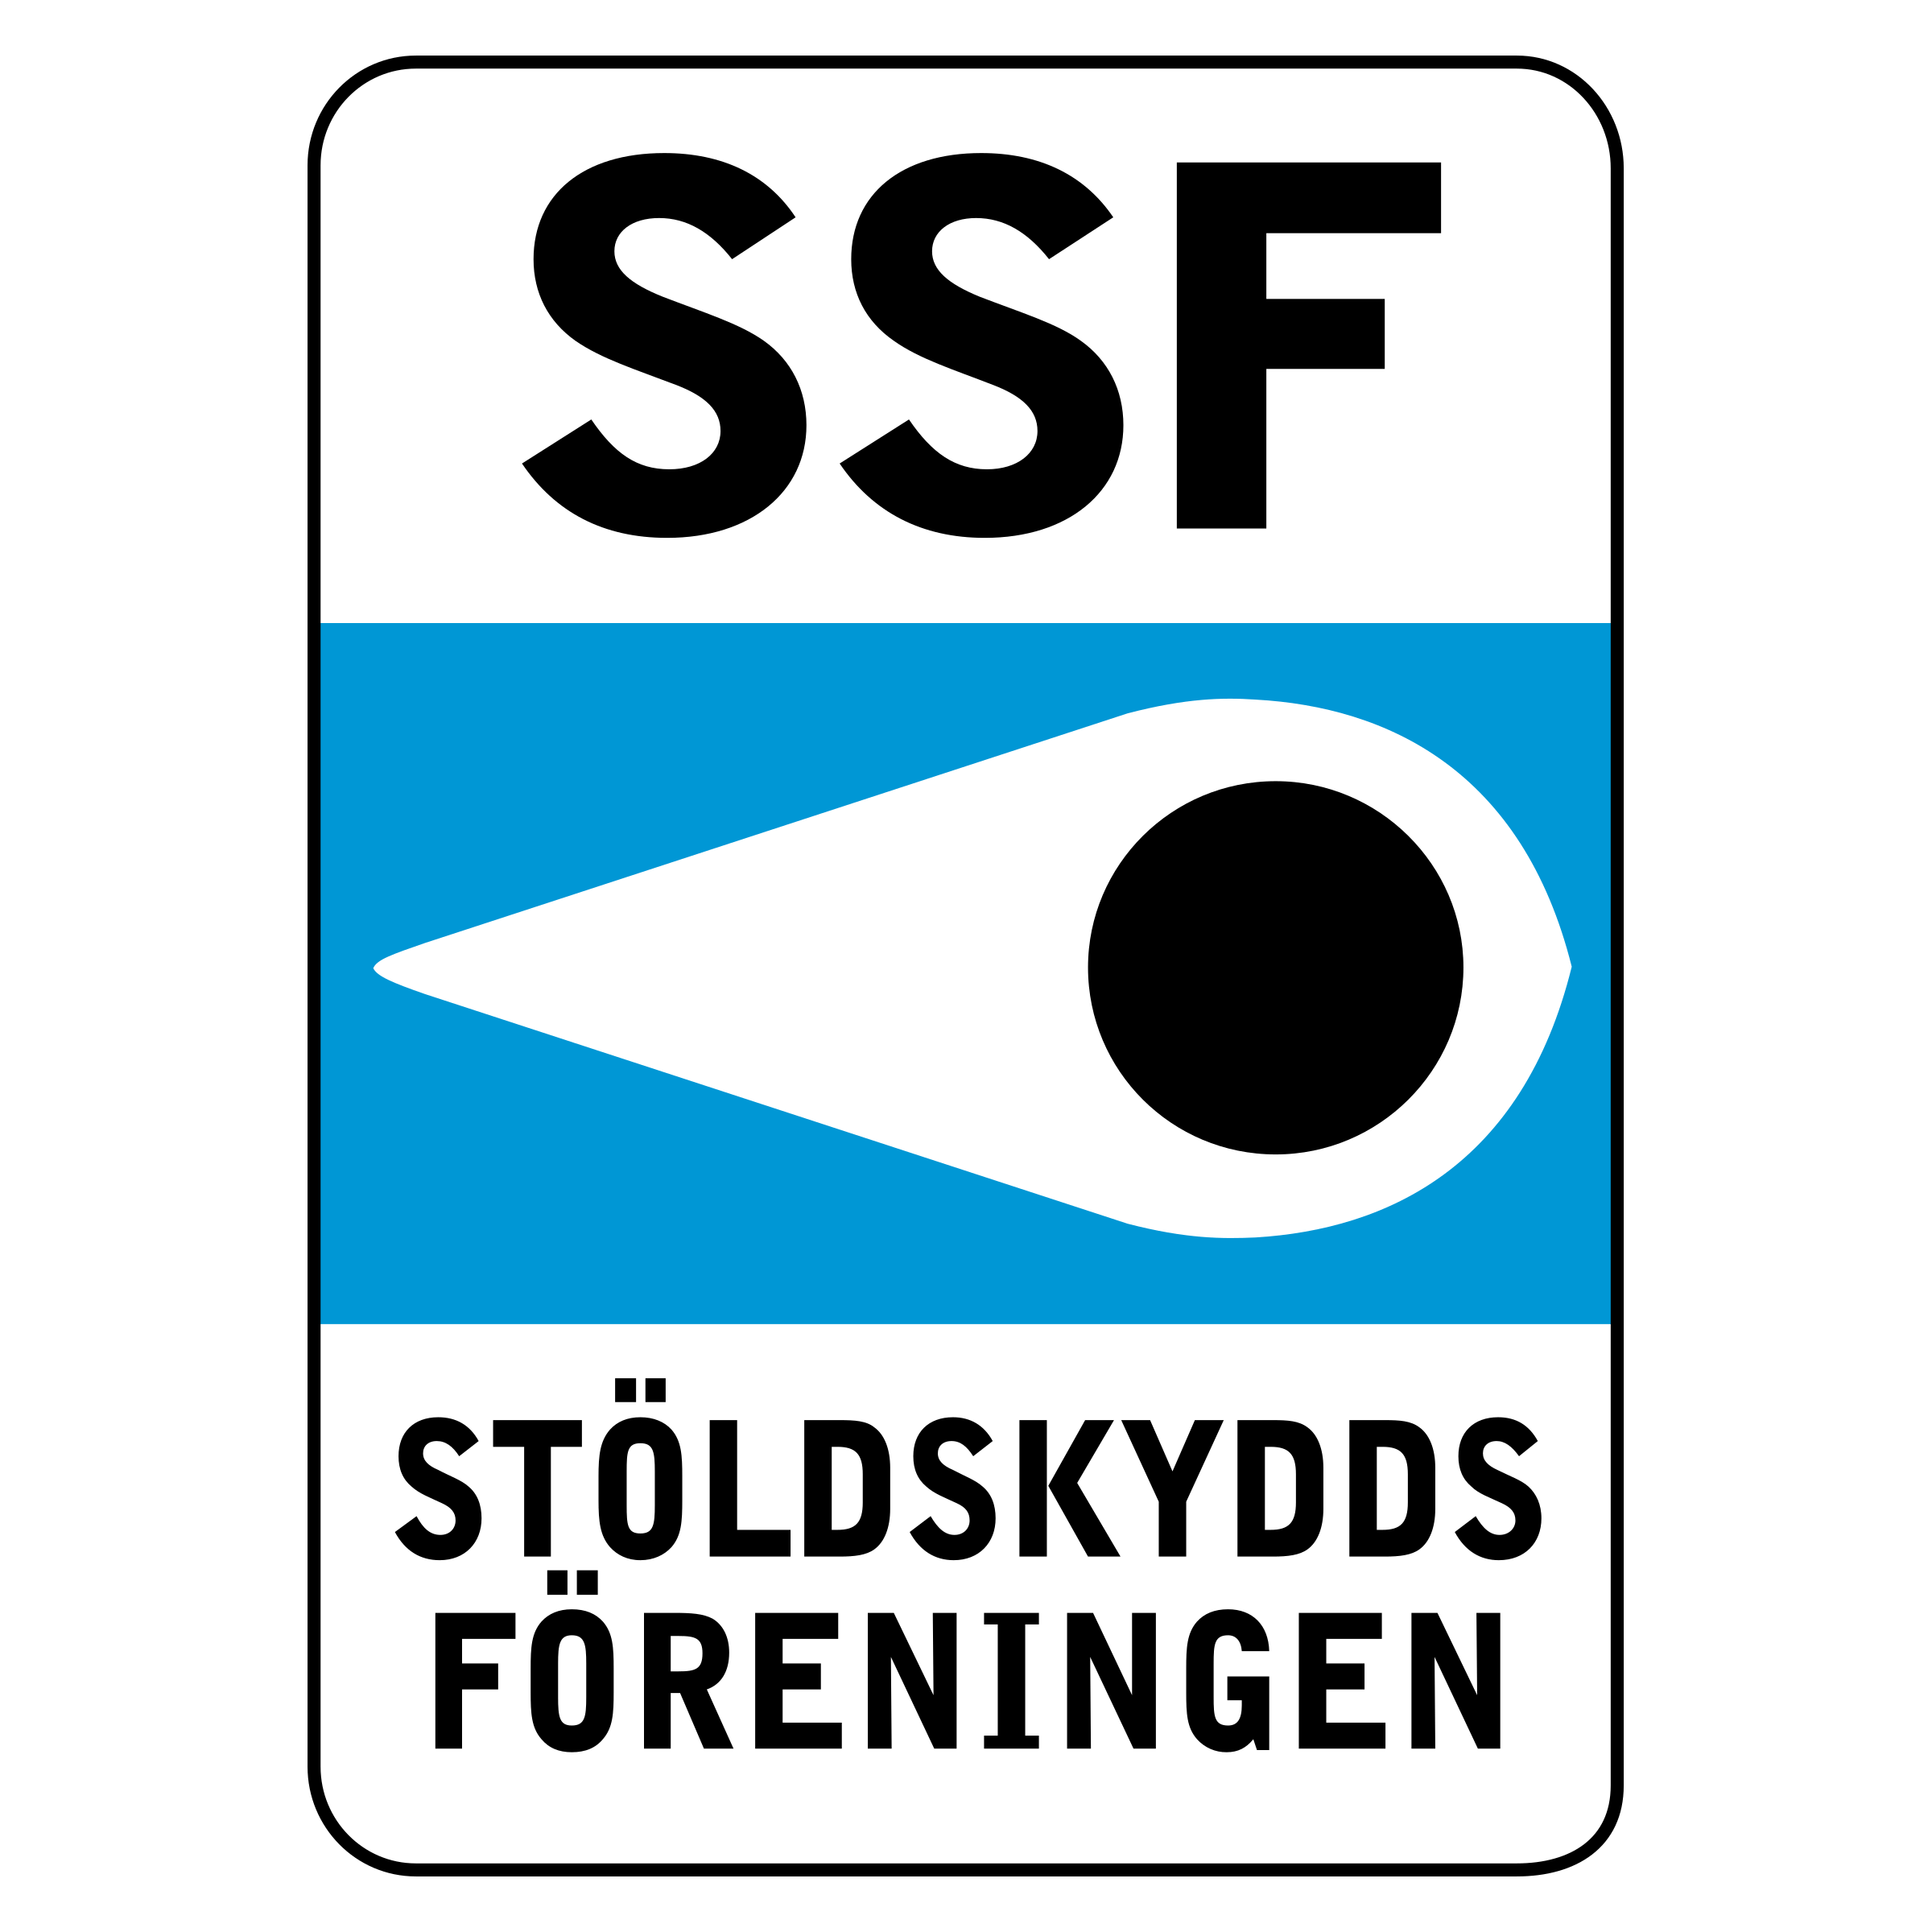 SSF Logo - SSF Logo PNG Transparent & SVG Vector - Freebie Supply